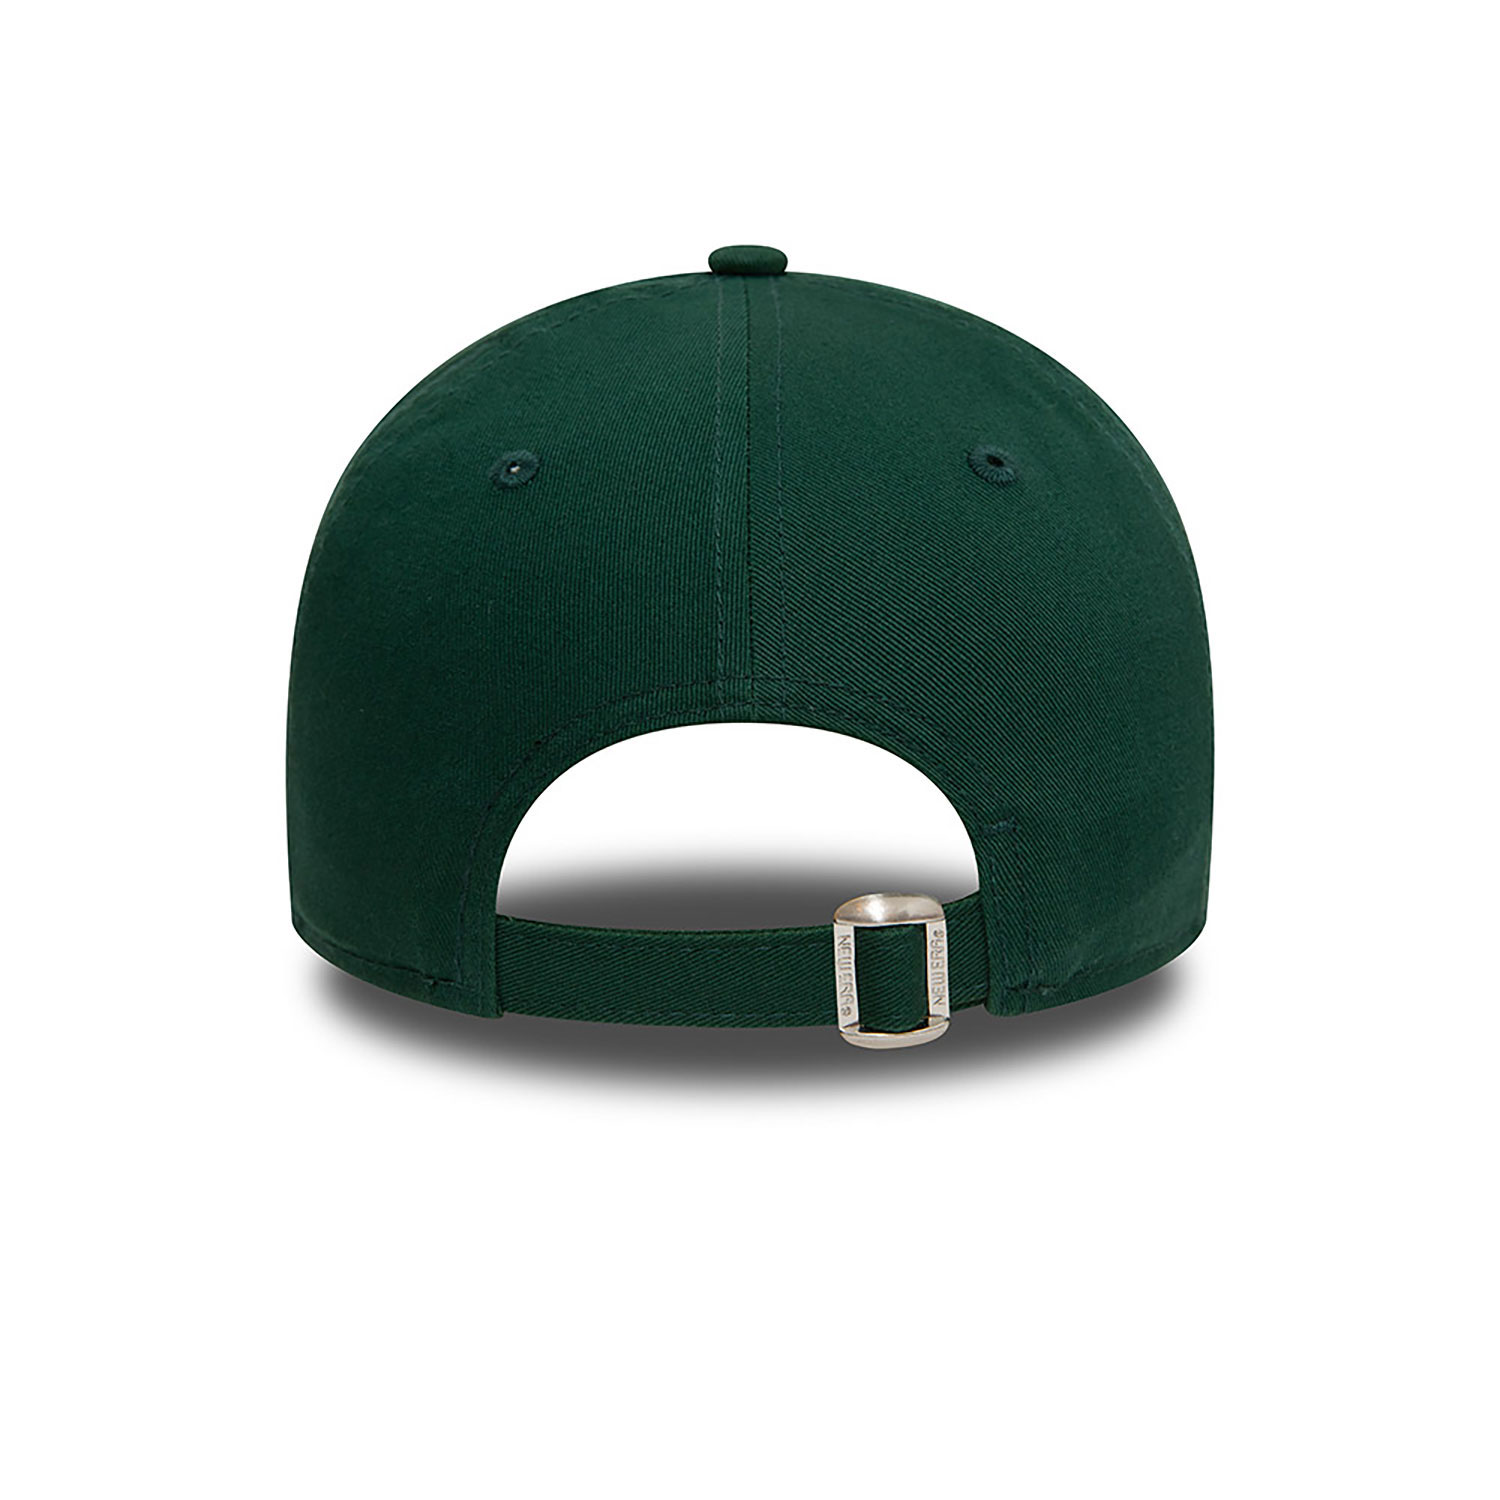 Oakland Athletics MLB Wordmark Dark Green 9TWENTY Adjustable Cap